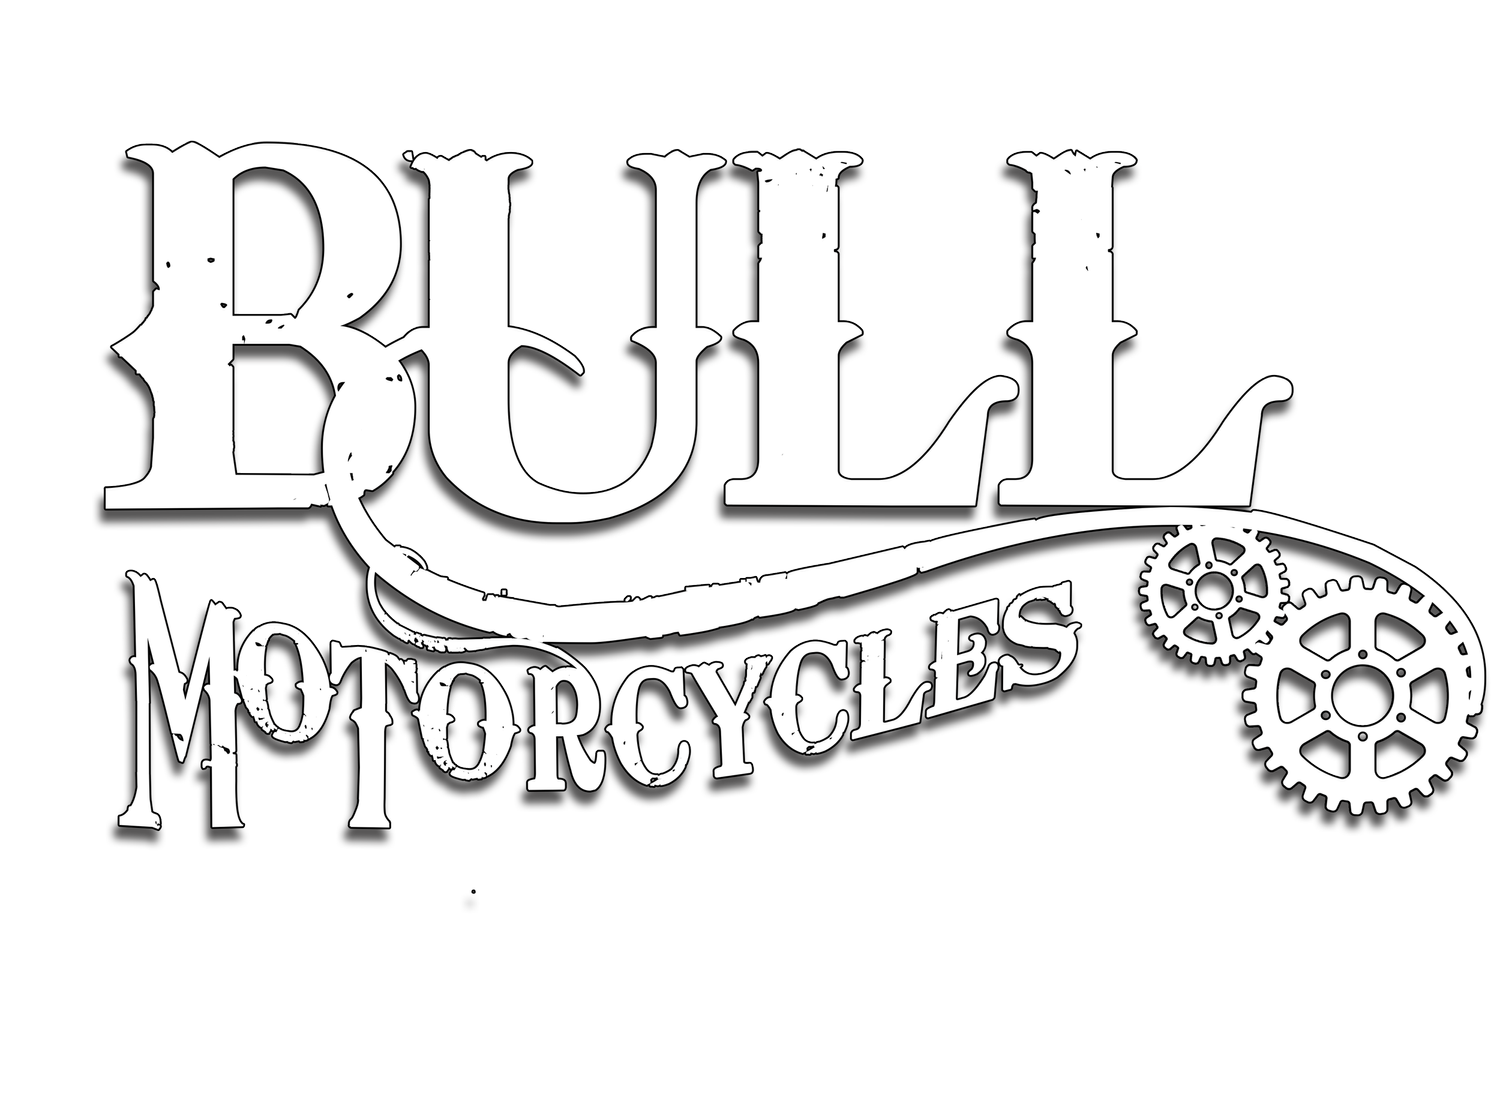 BULL MOTORCYLES